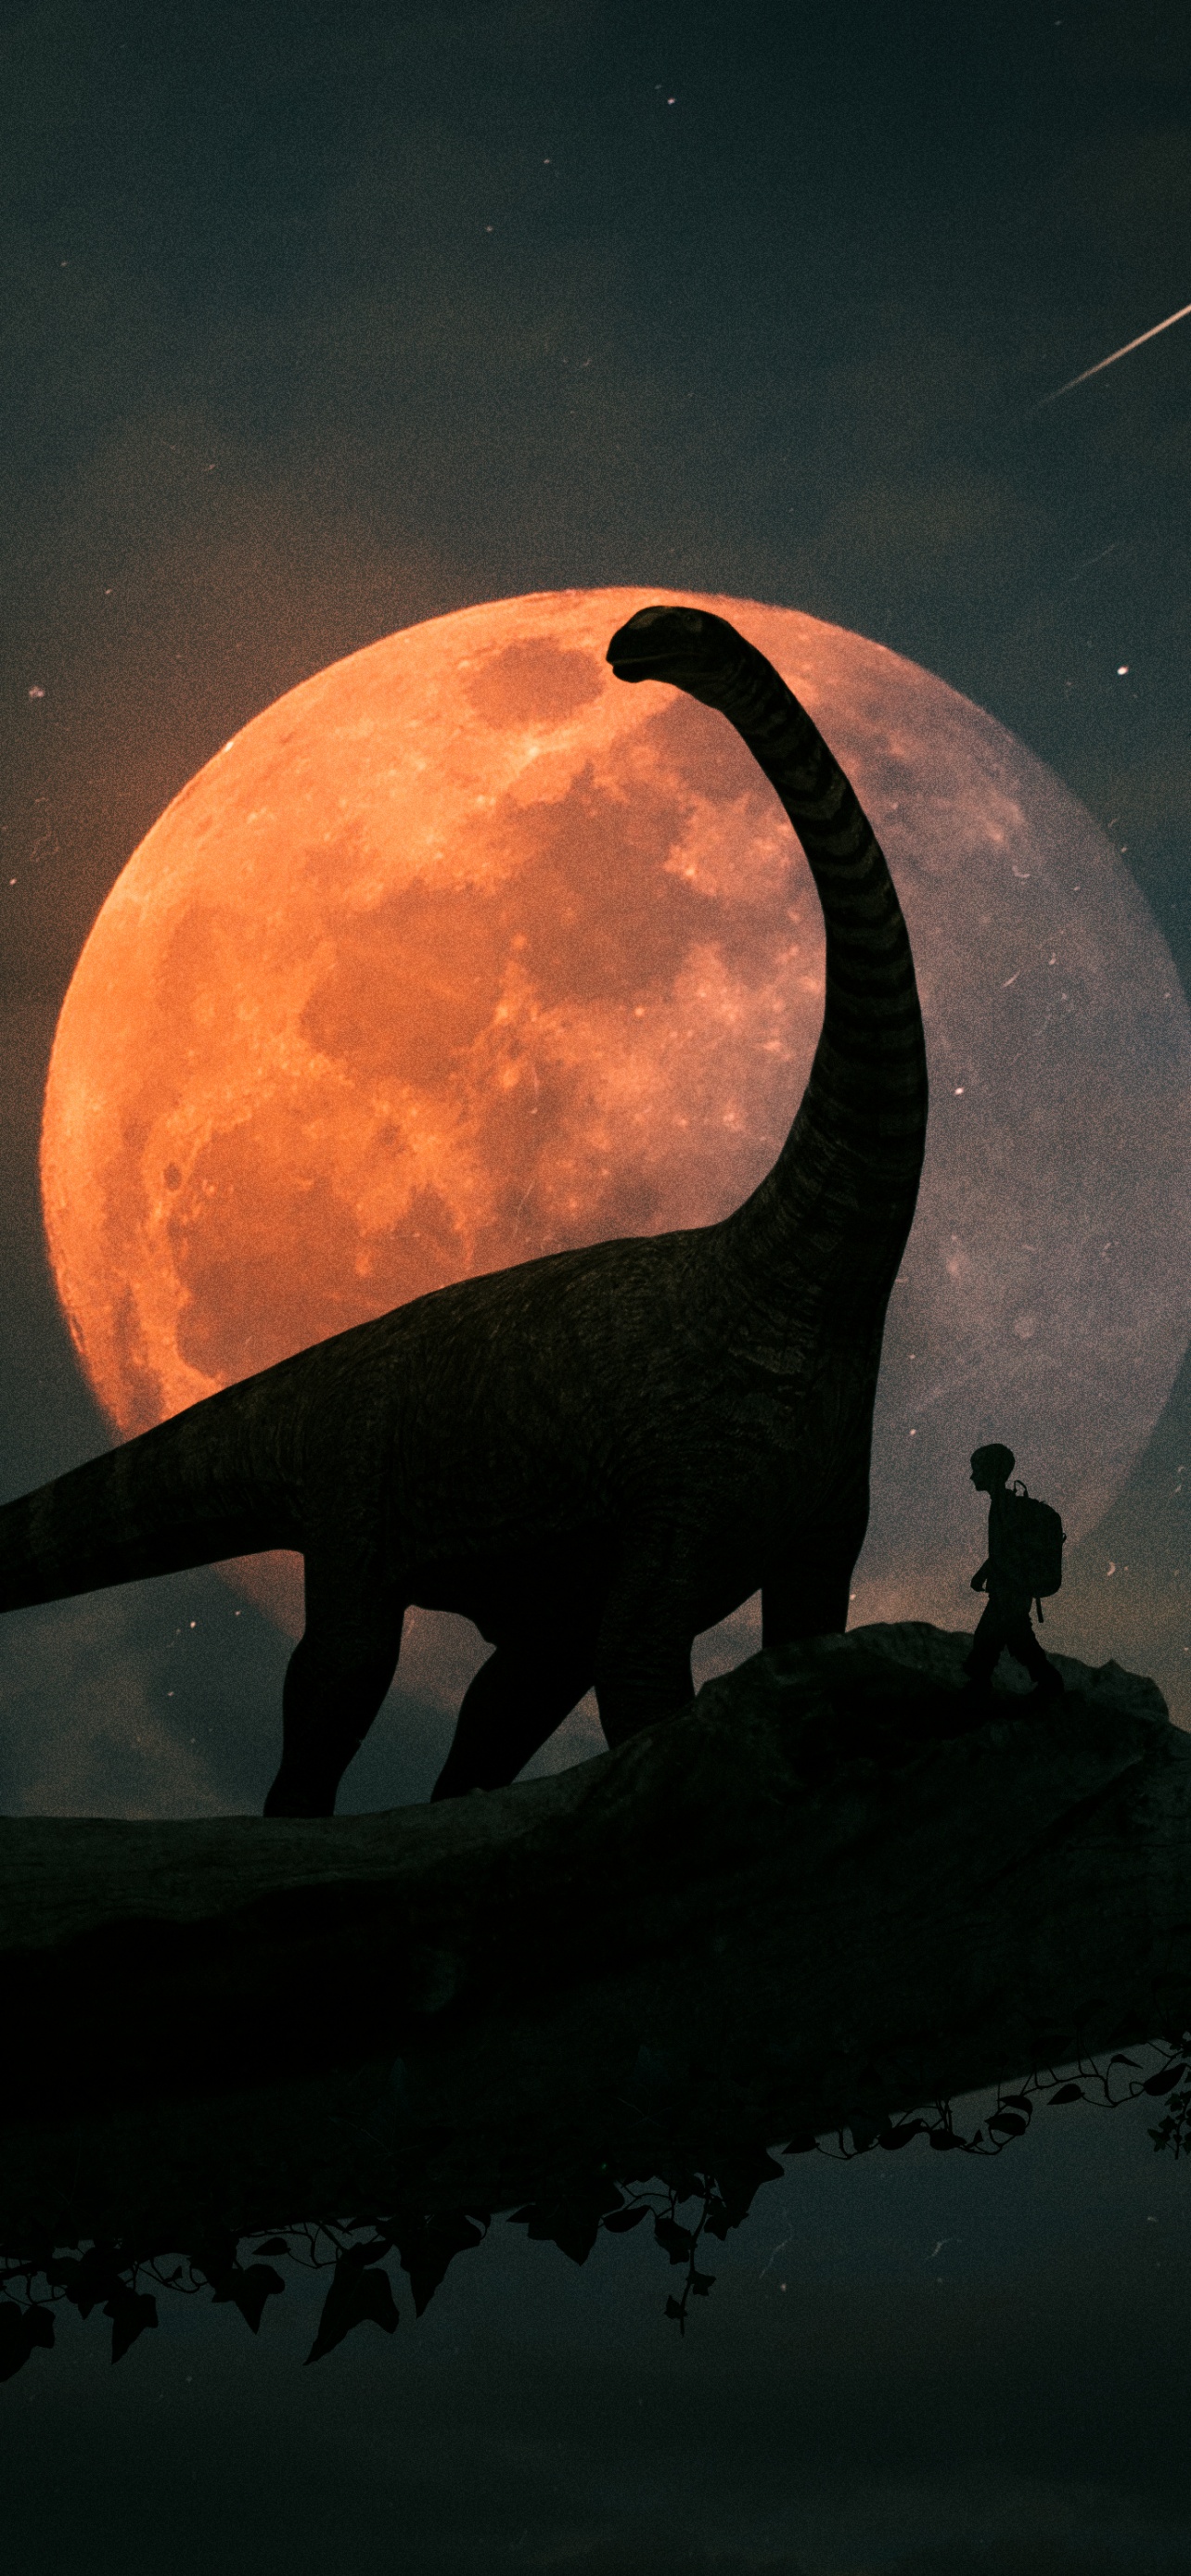 Cute Dinosaur Wandering In Cities iPhone Wallpapers Free Download